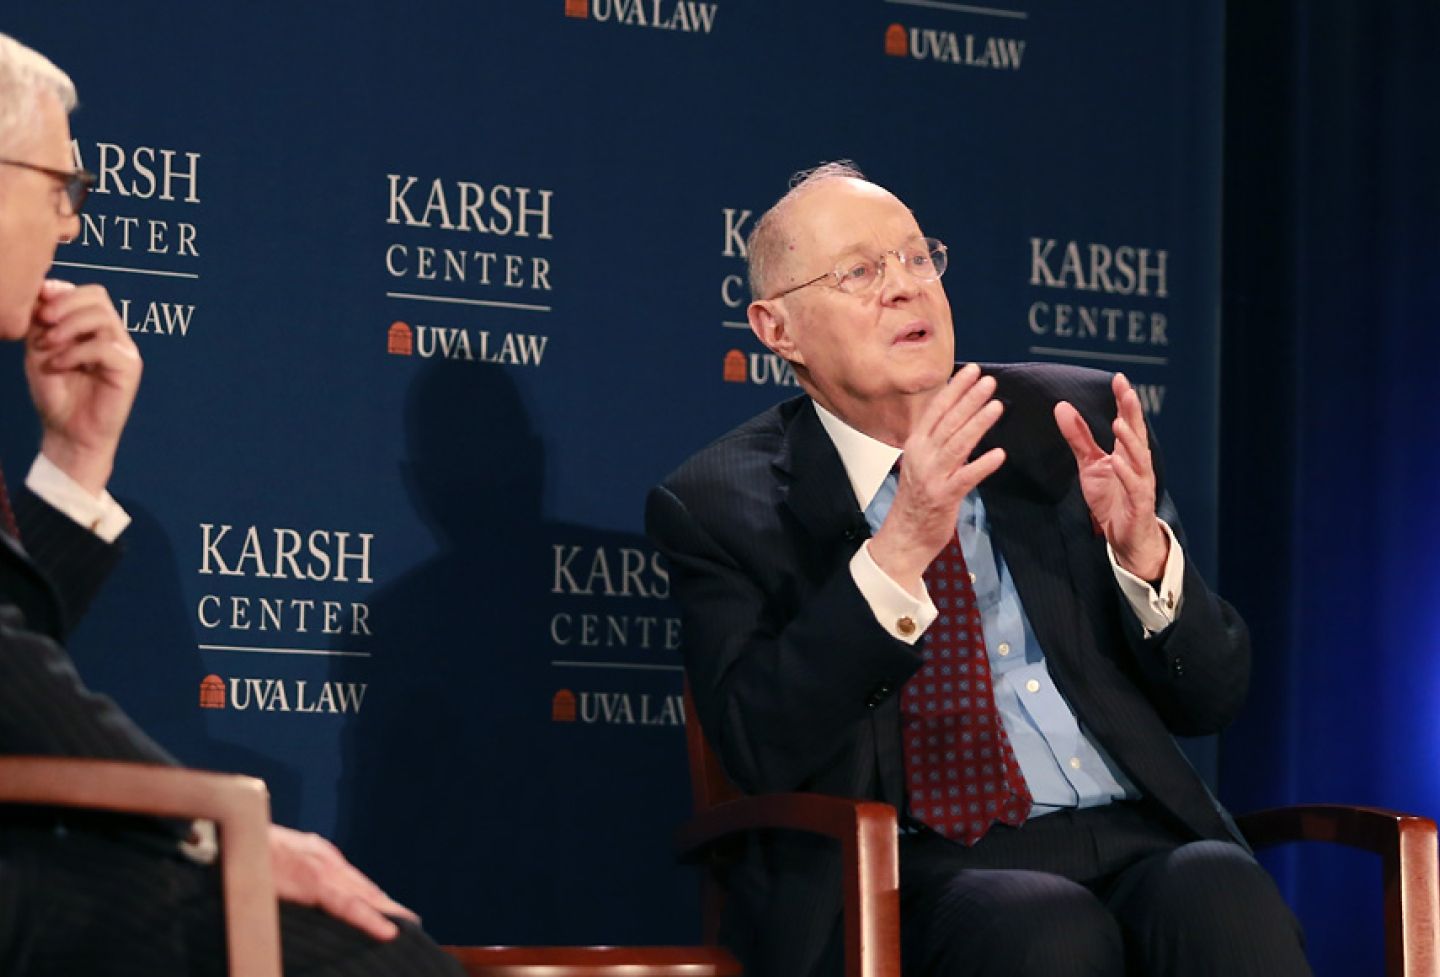 David Rubenstein and Justice Anthony Kennedy